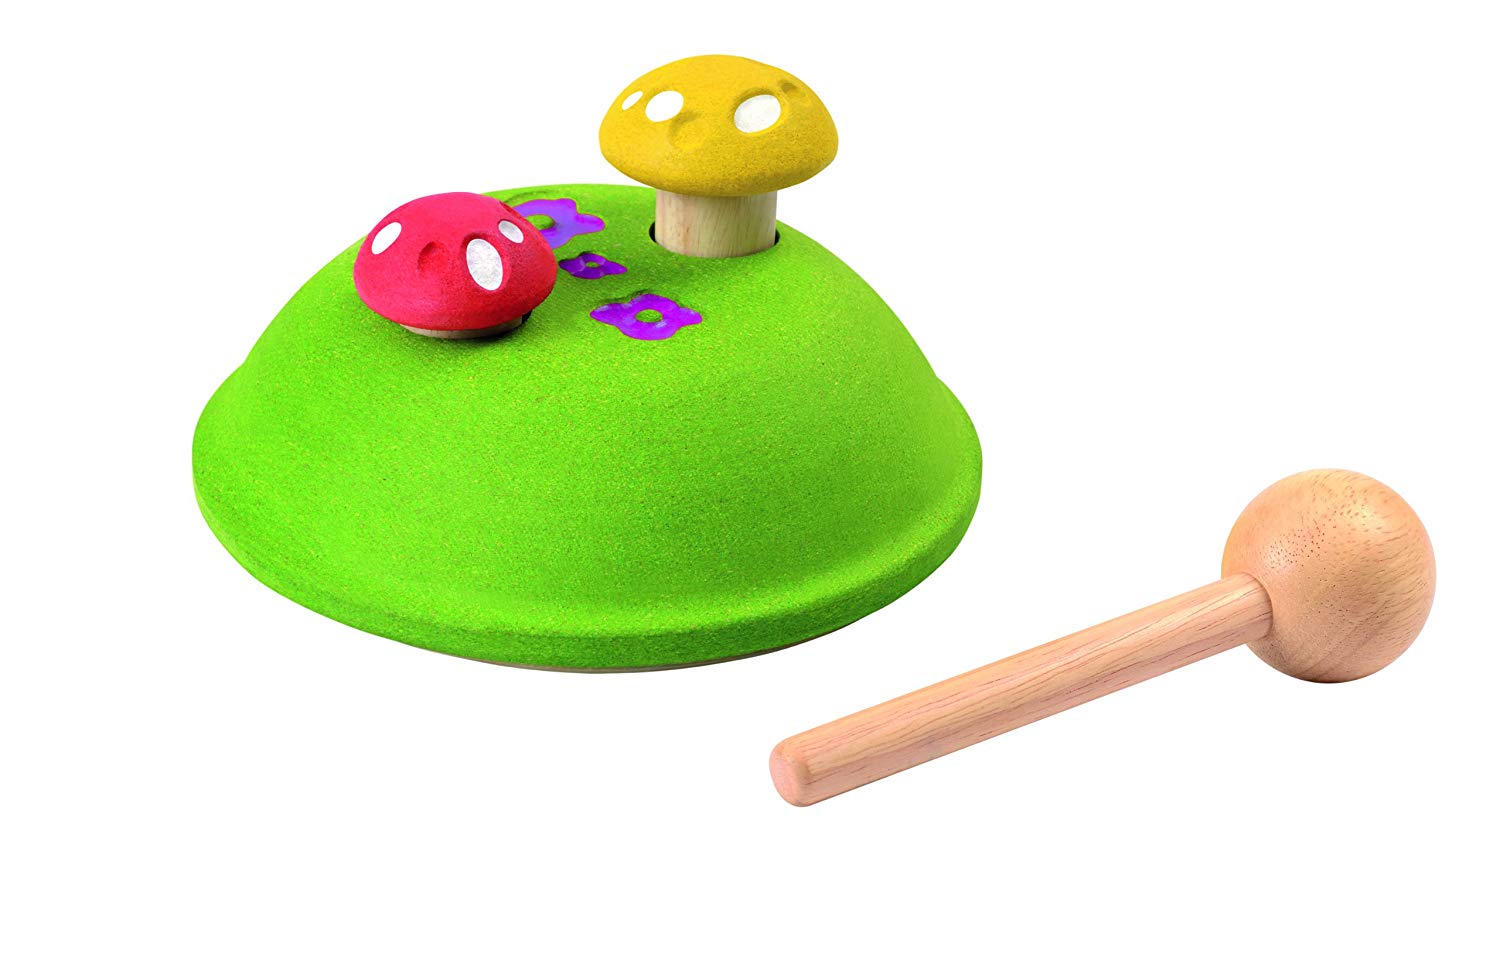 Plan Toys Poun Ding Mushrooms By S